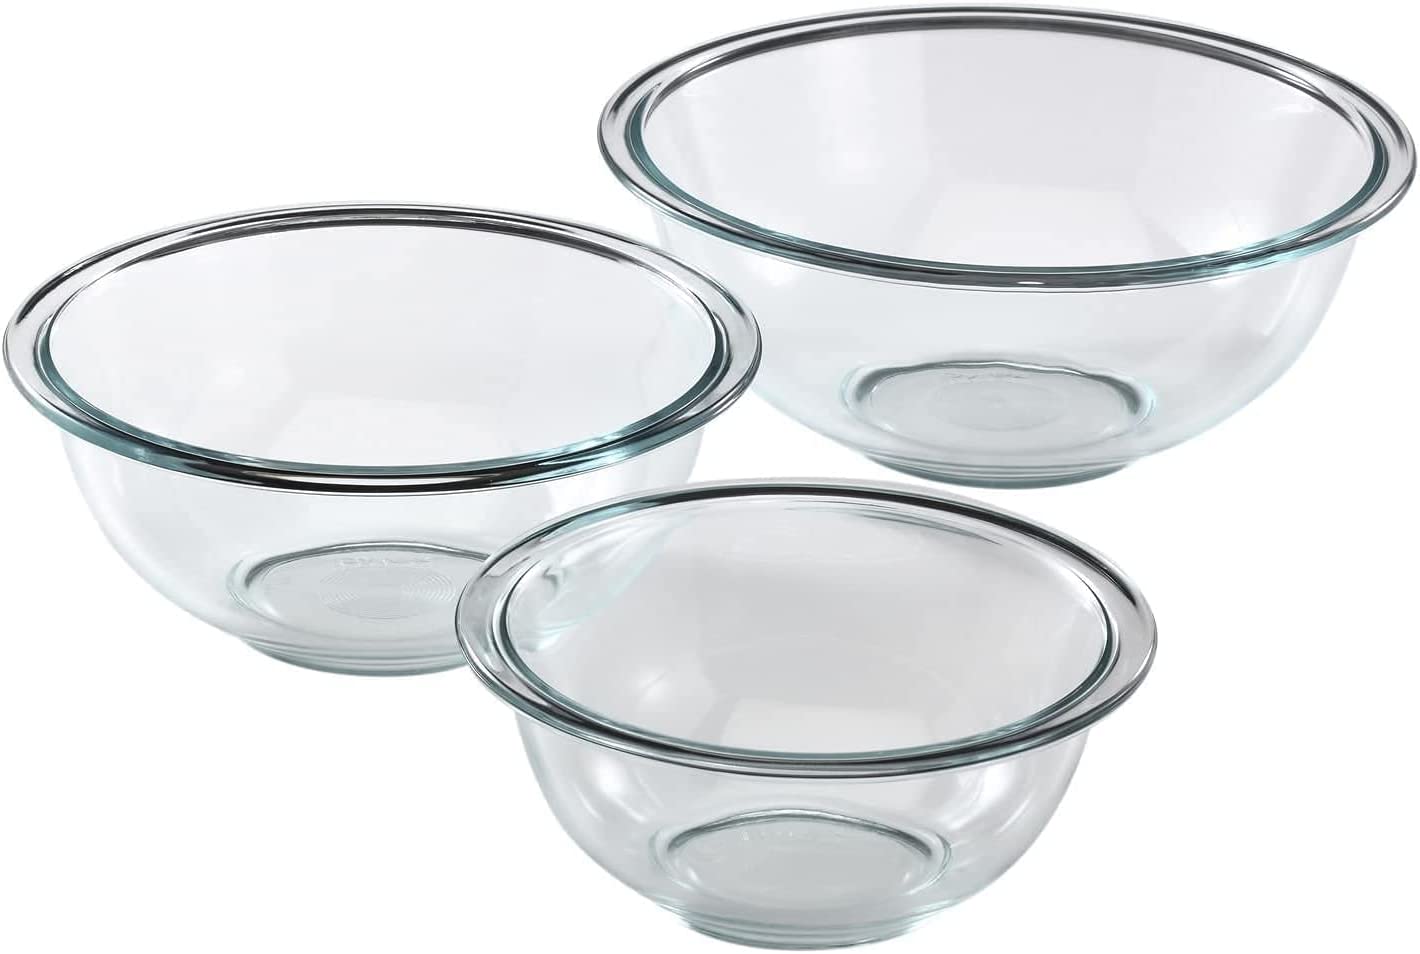 Pyrex glass mixing bowls.